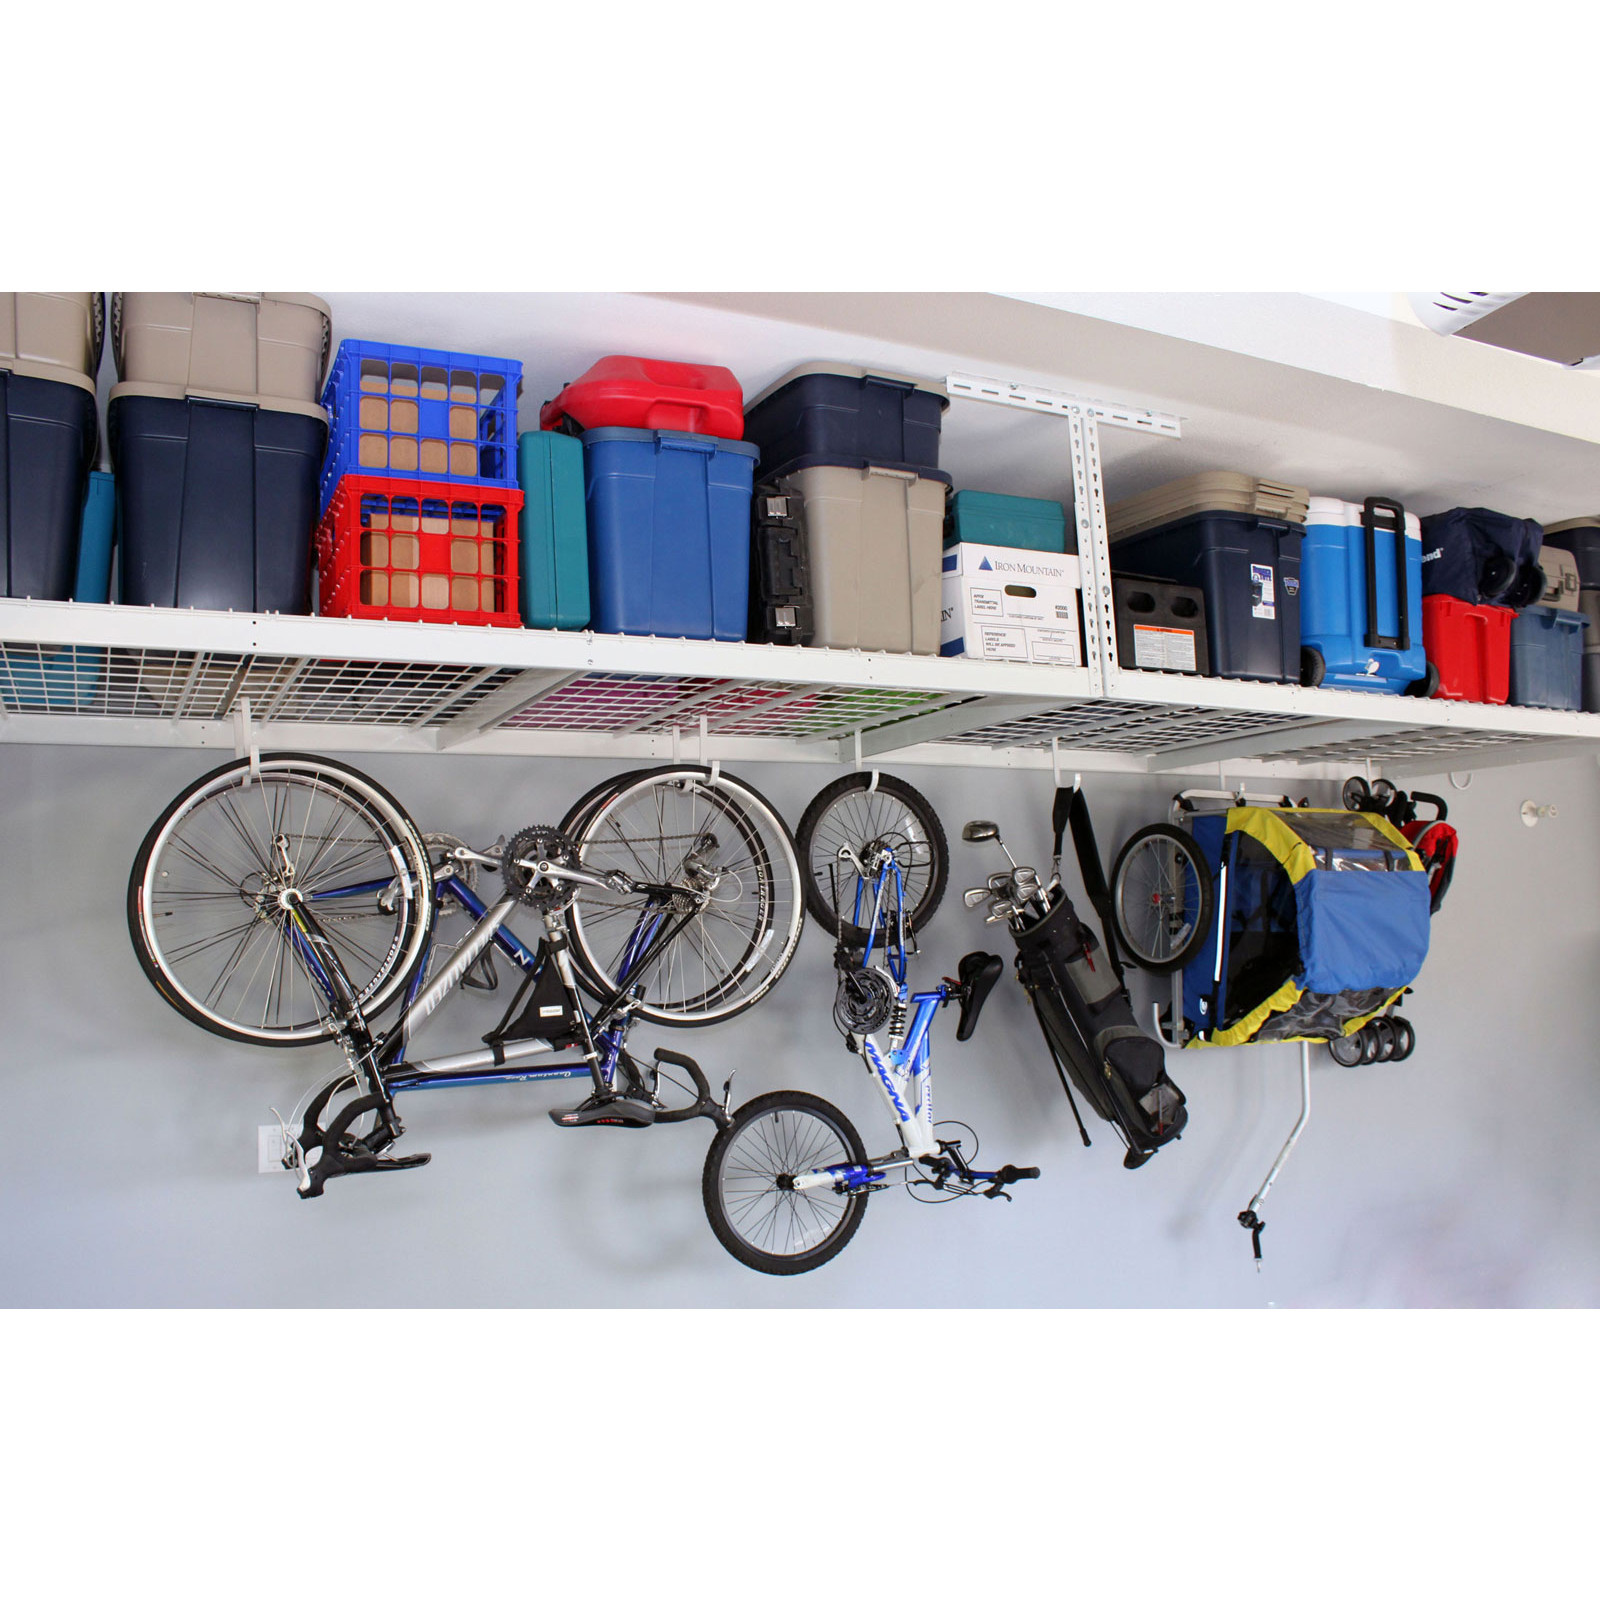 Best ideas about Garage Storage Rack
. Save or Pin 4 x 8 Overhead Storage Rack Overhead Garage Storage Now.